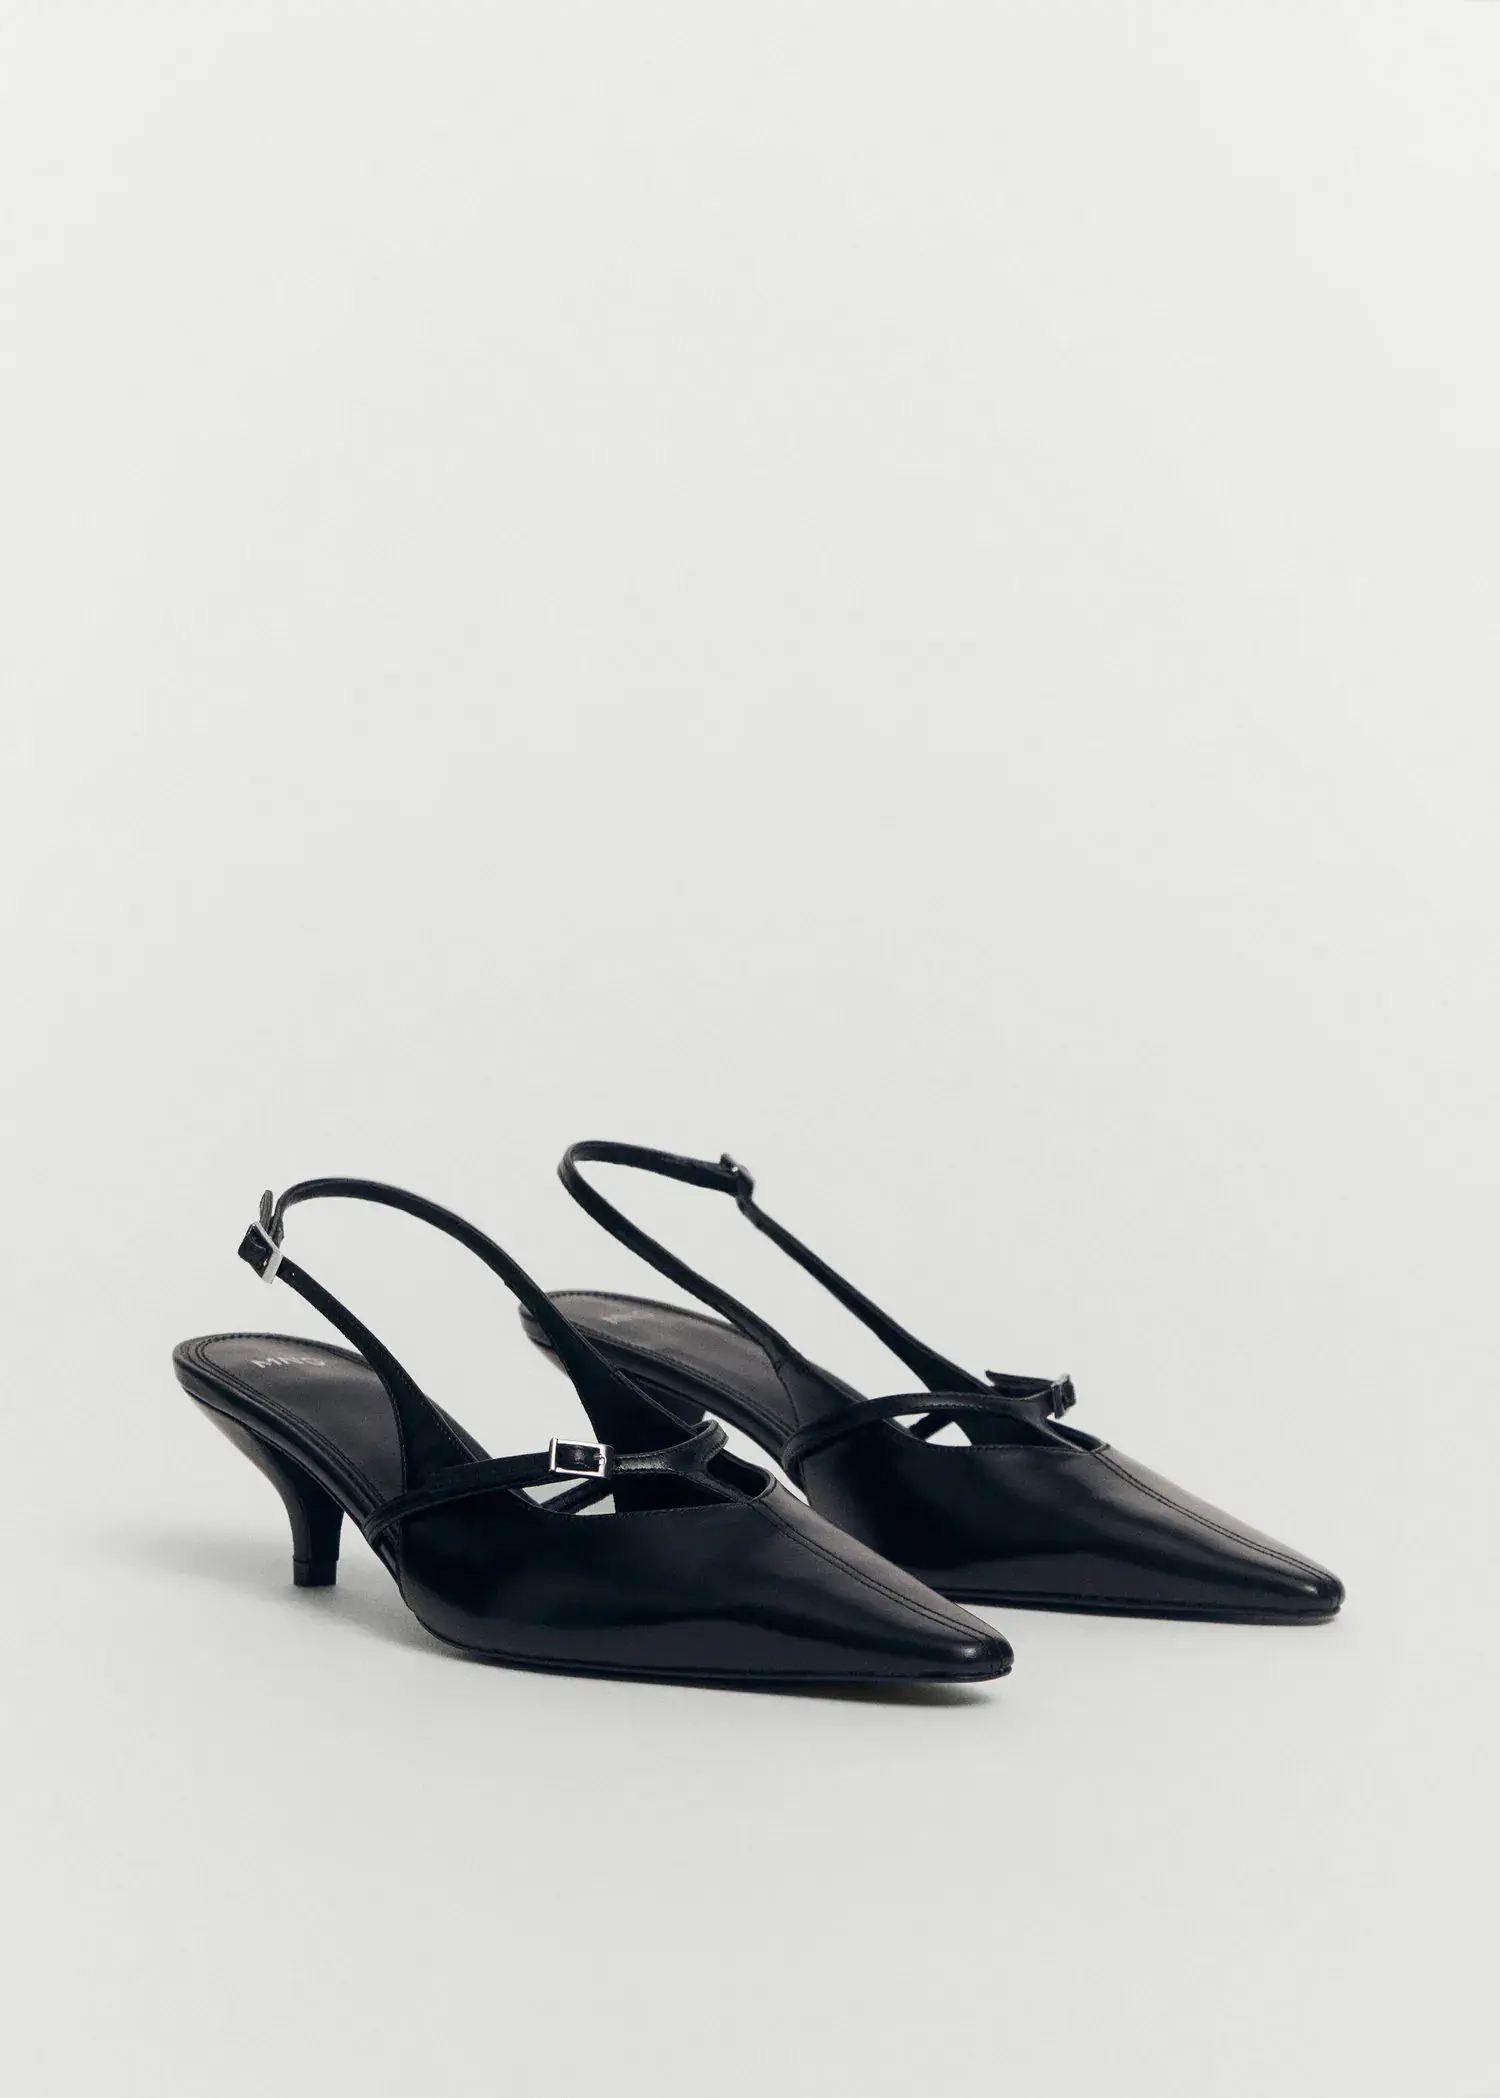 Mango Leather heeled slingback shoes with buckles. 3